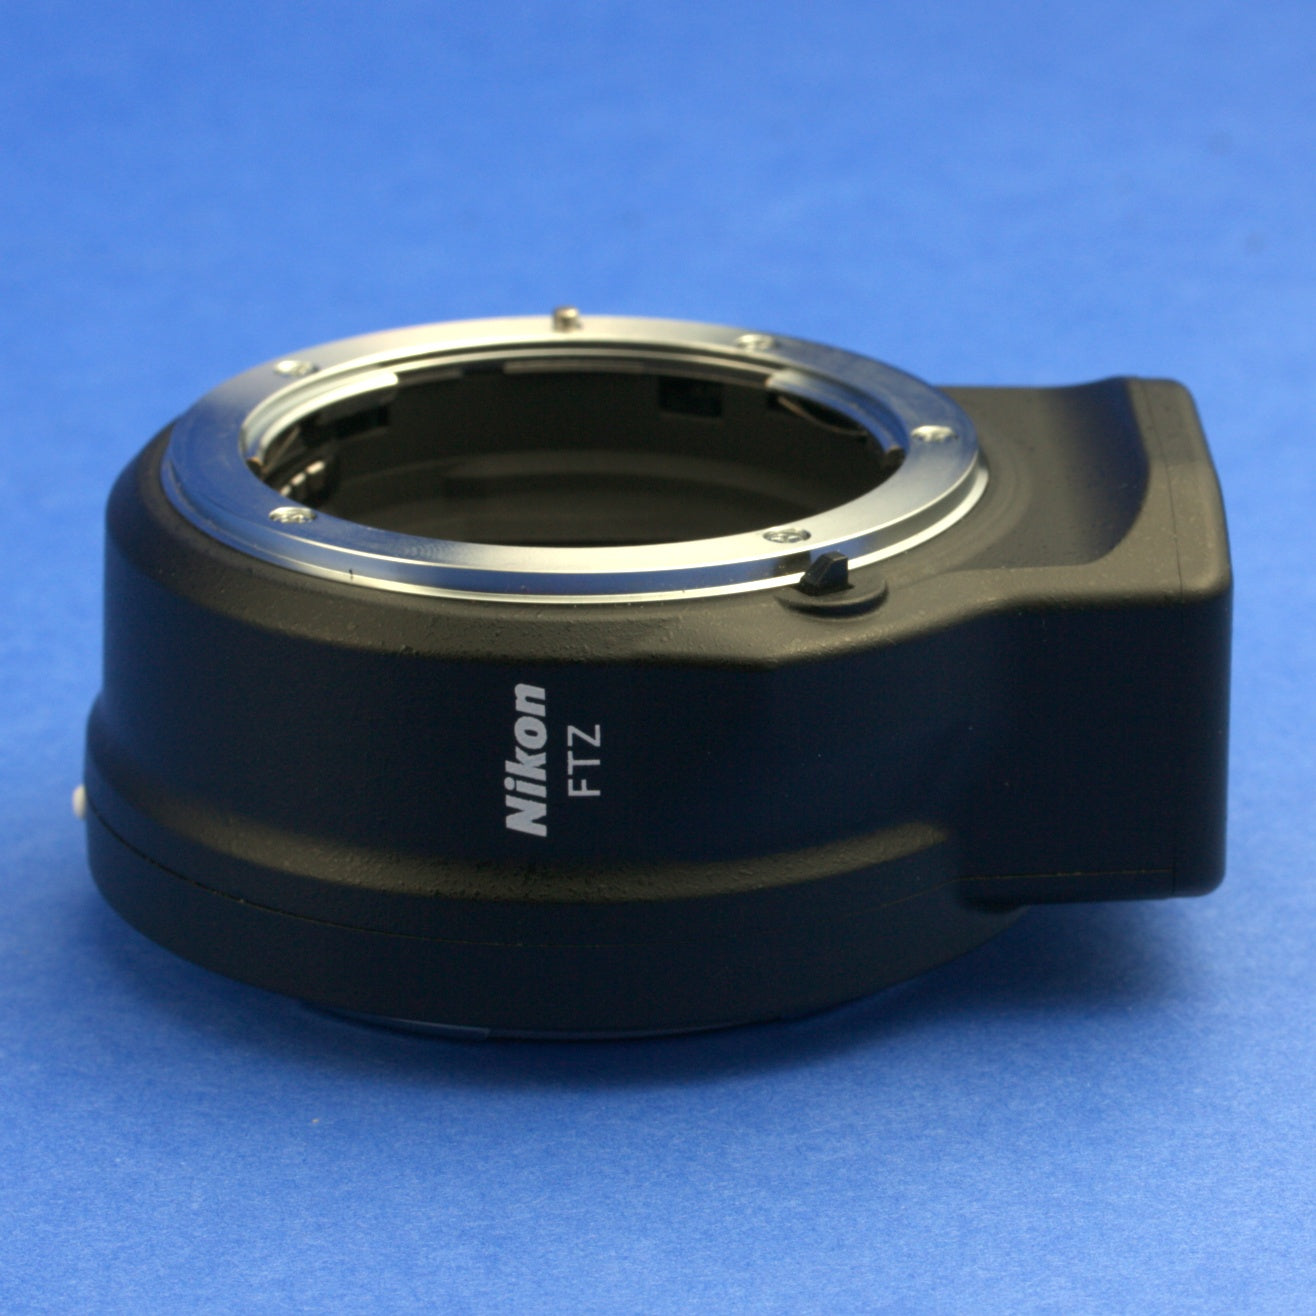 Nikon FTZ Adapter Lens Adapter